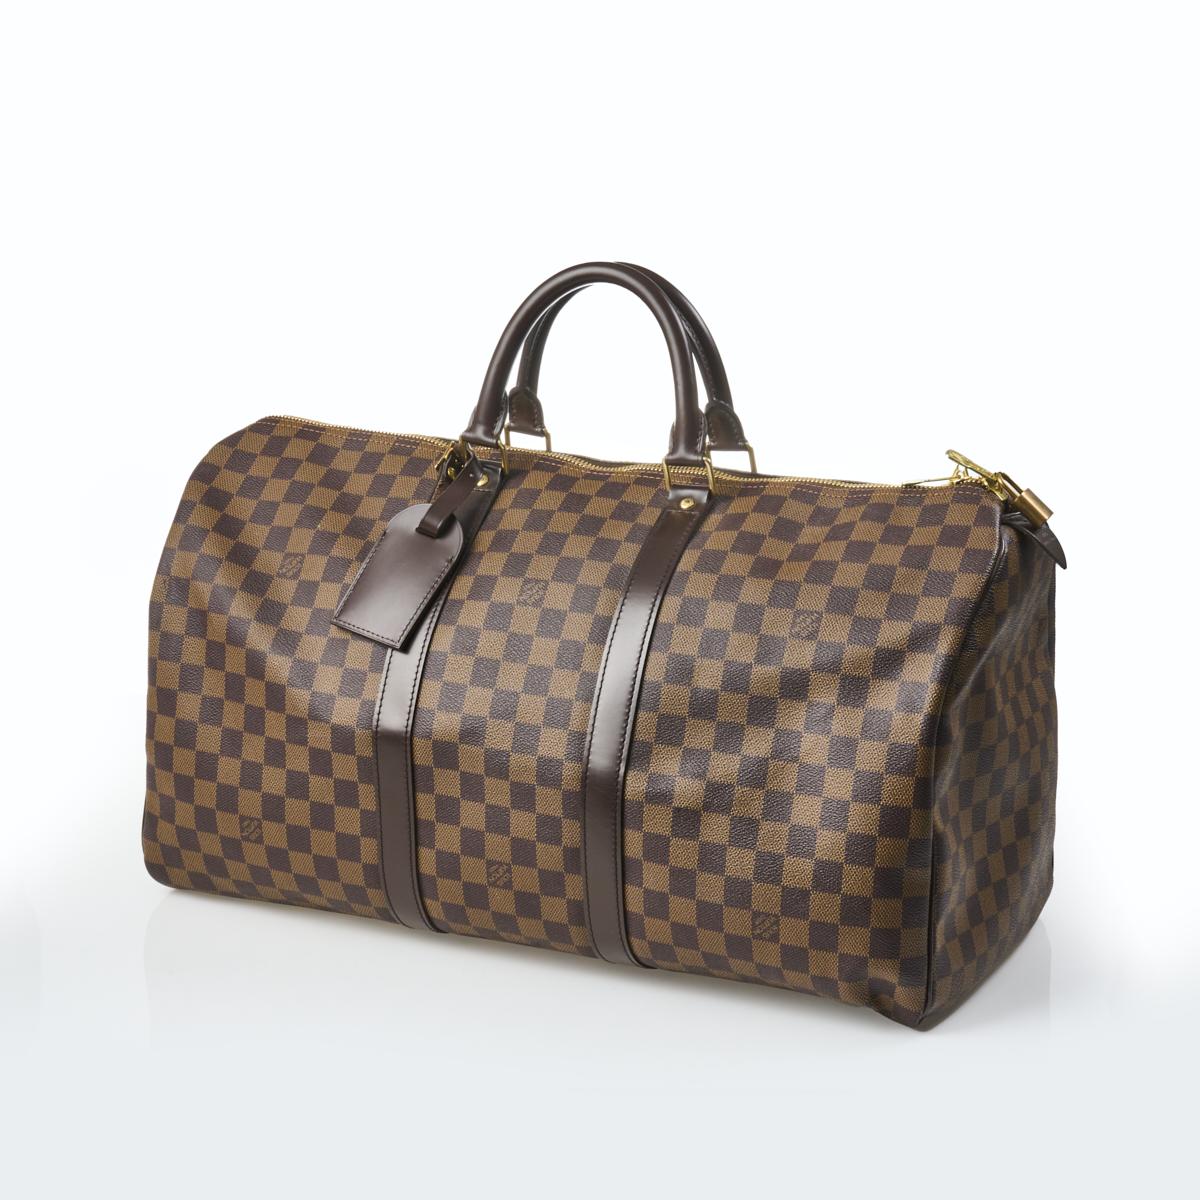 LOOK FOR LESS: Louis Vuitton Damier Bags (under $50!)